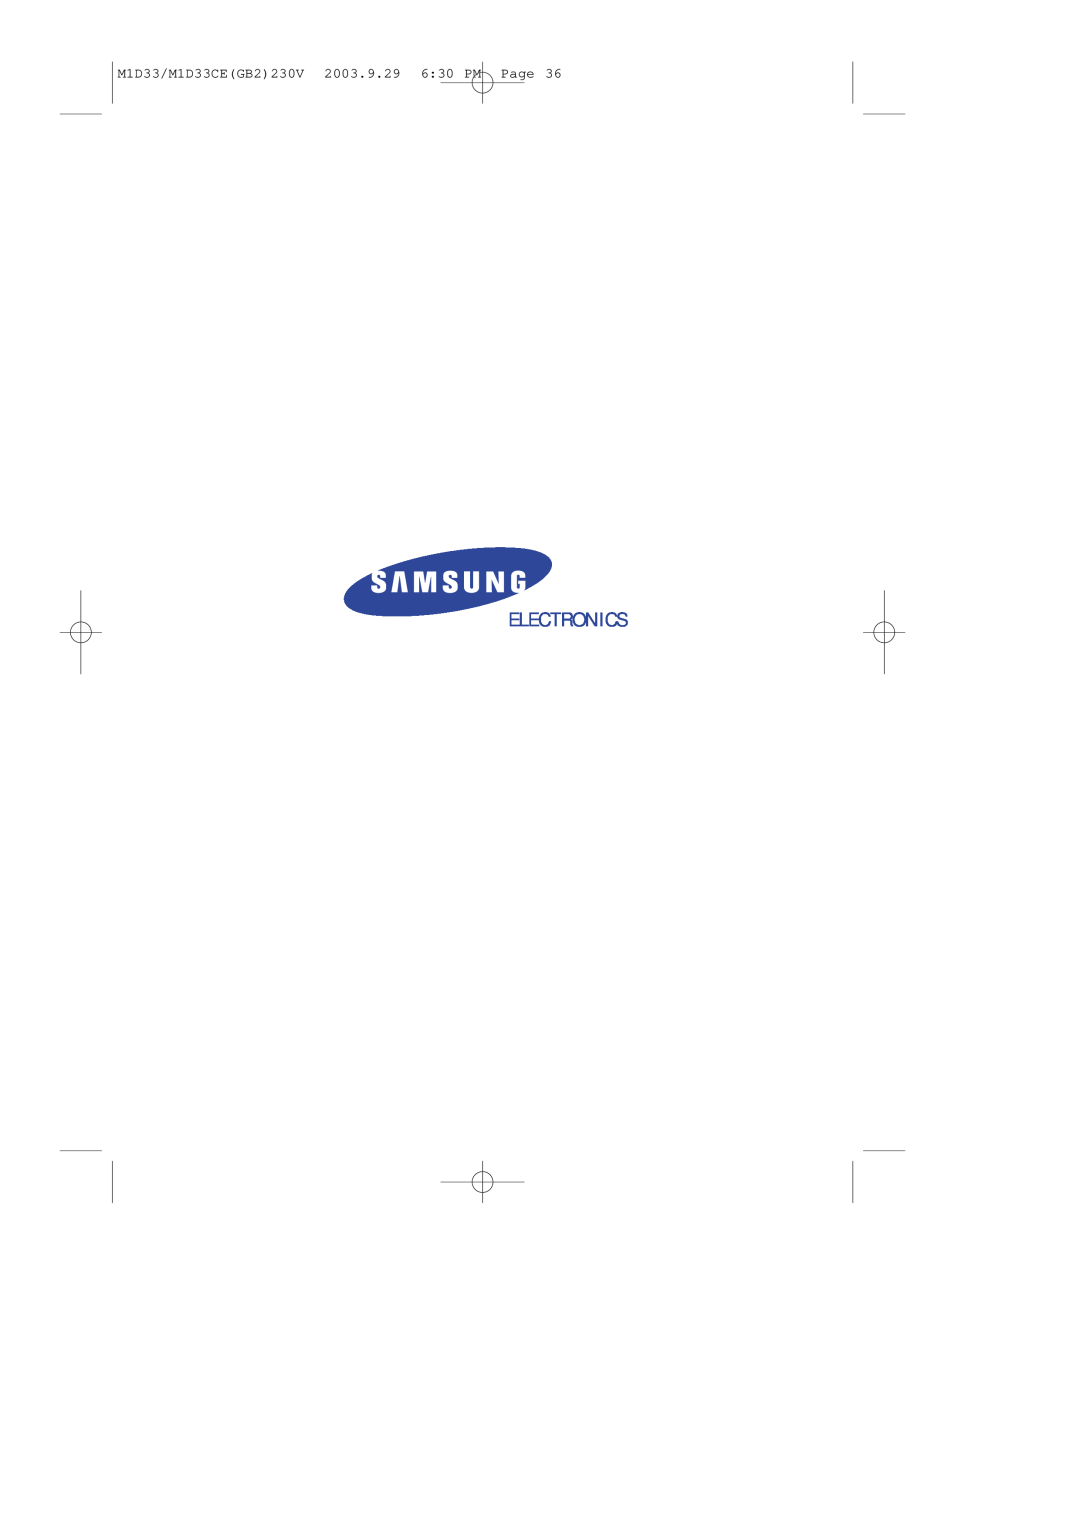 Samsung manual Electronics, M1D33/M1D33CEGB2230V 2003.9.29 630 PM Page 